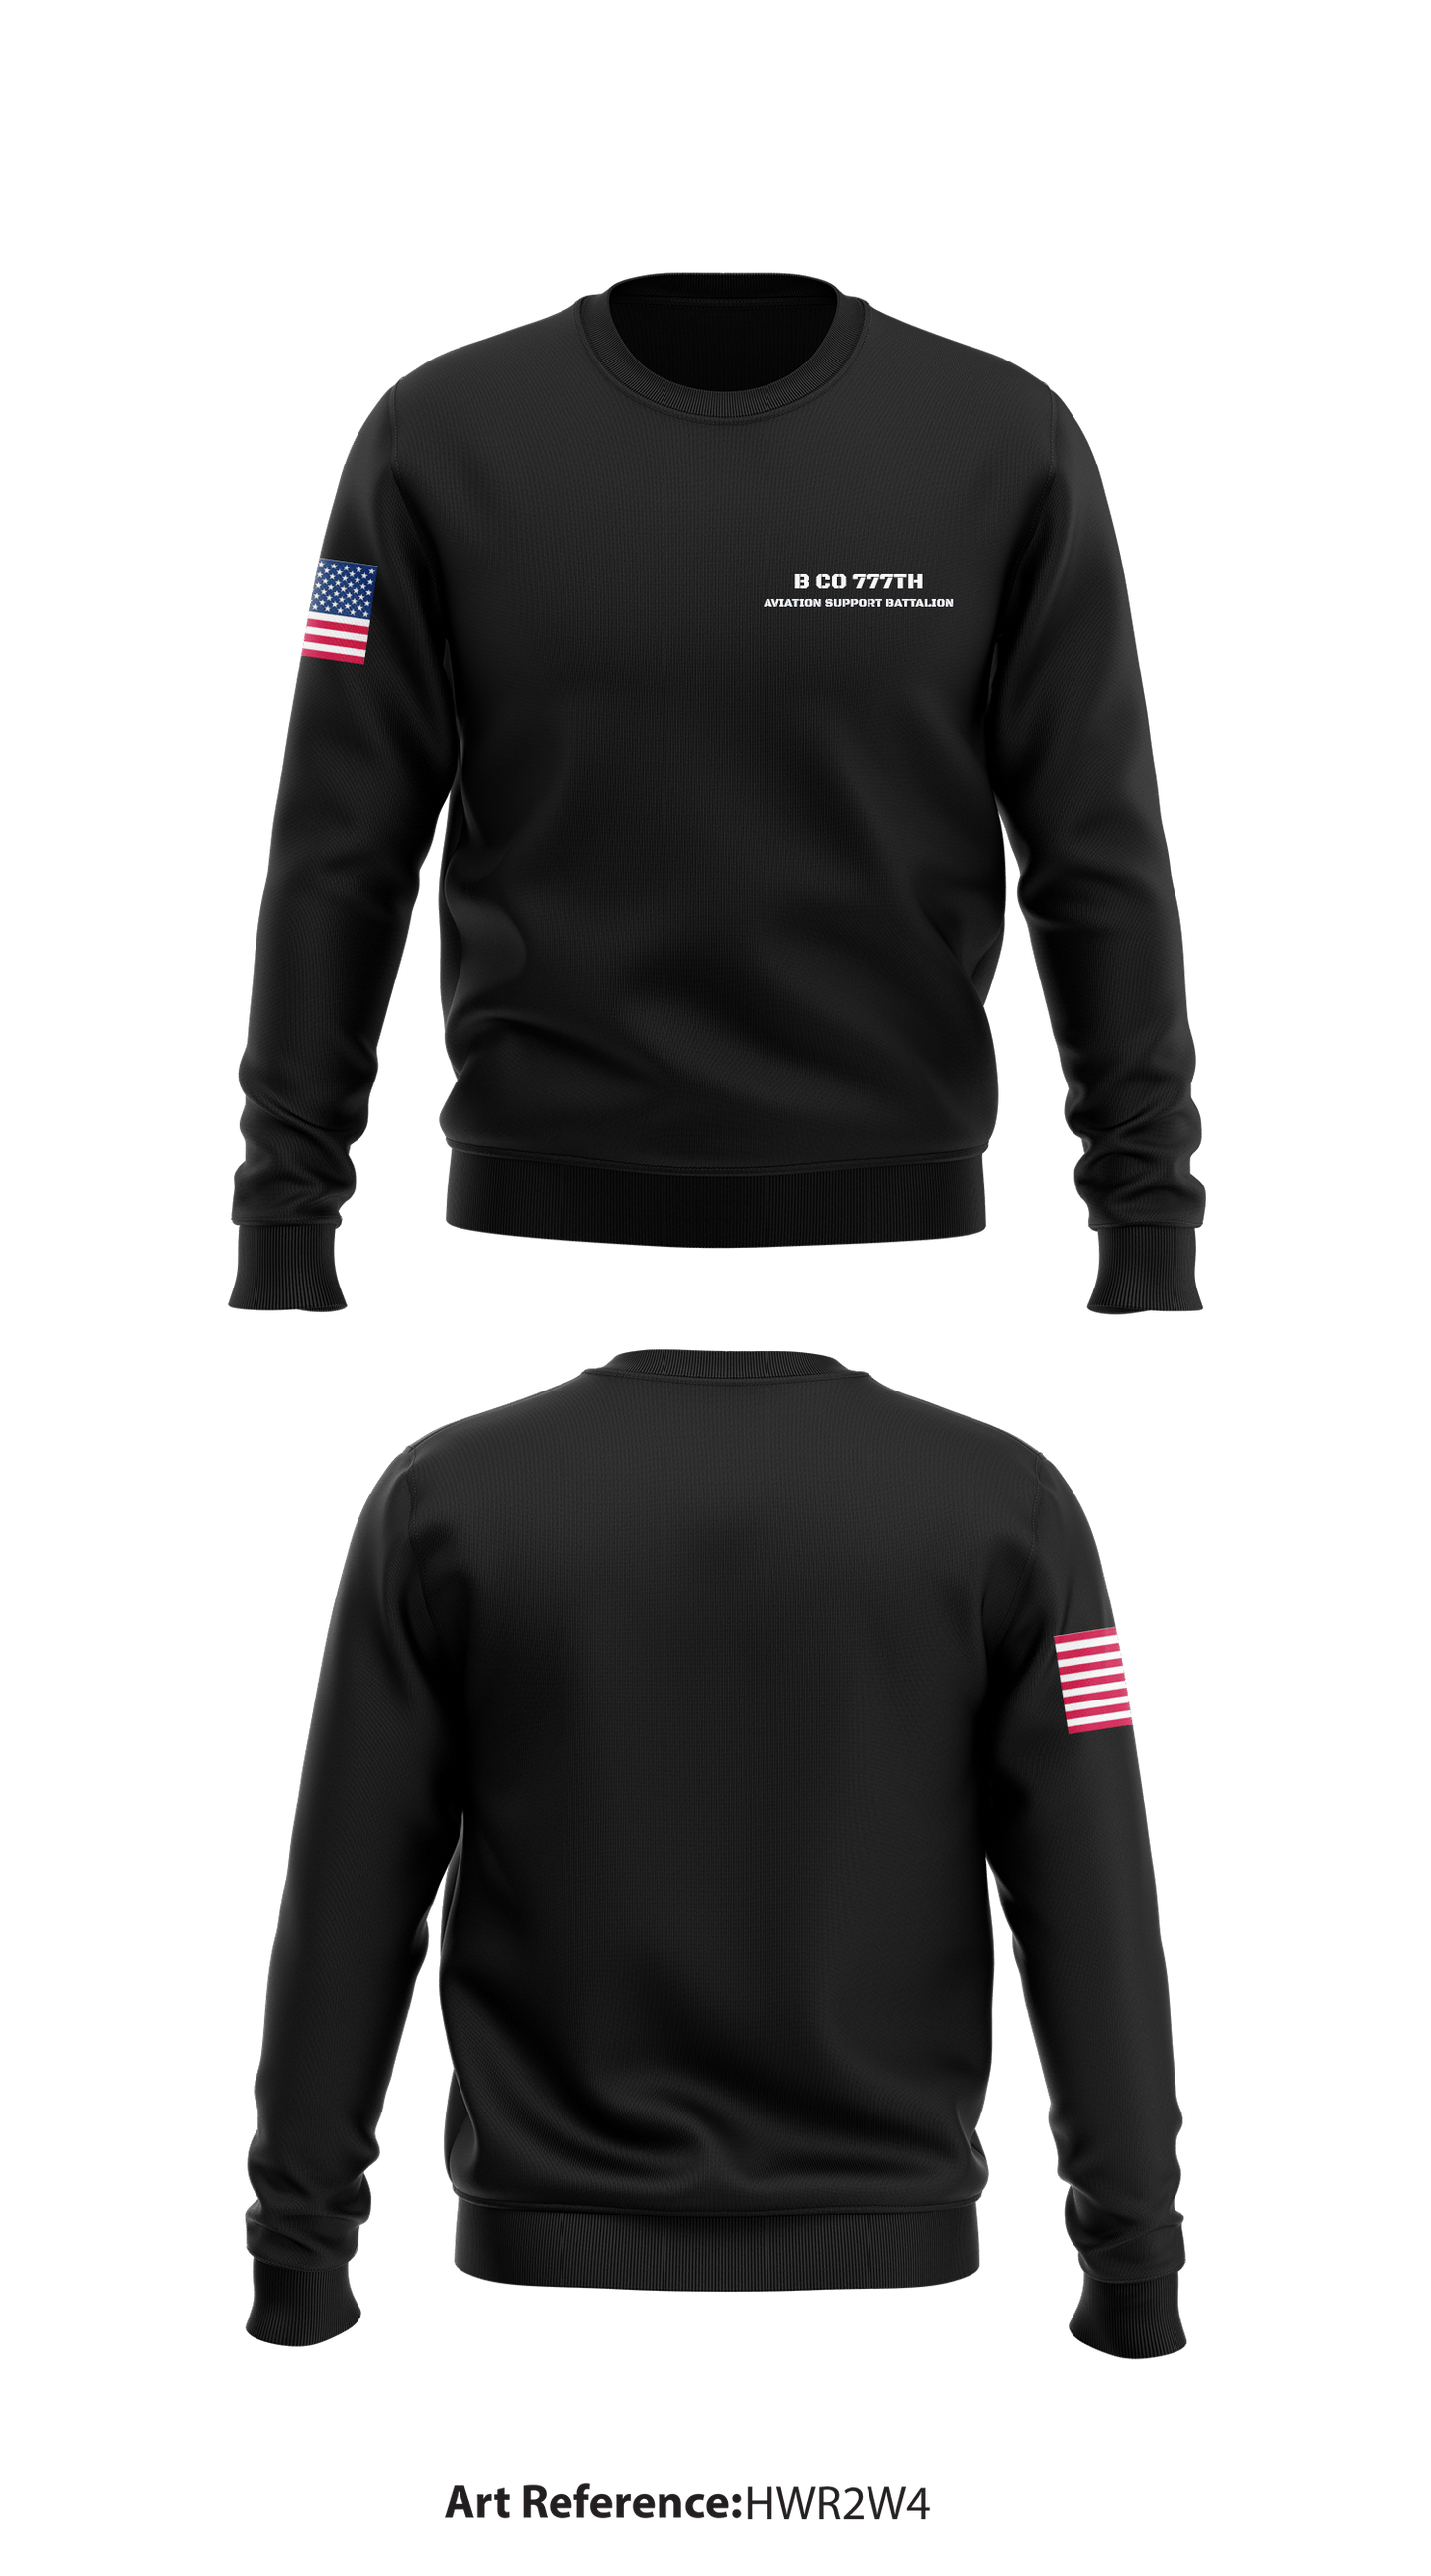 B Co 777th Aviation Support Battalion Store 1 Core Men's Crewneck Performance Sweatshirt - HWR2w4